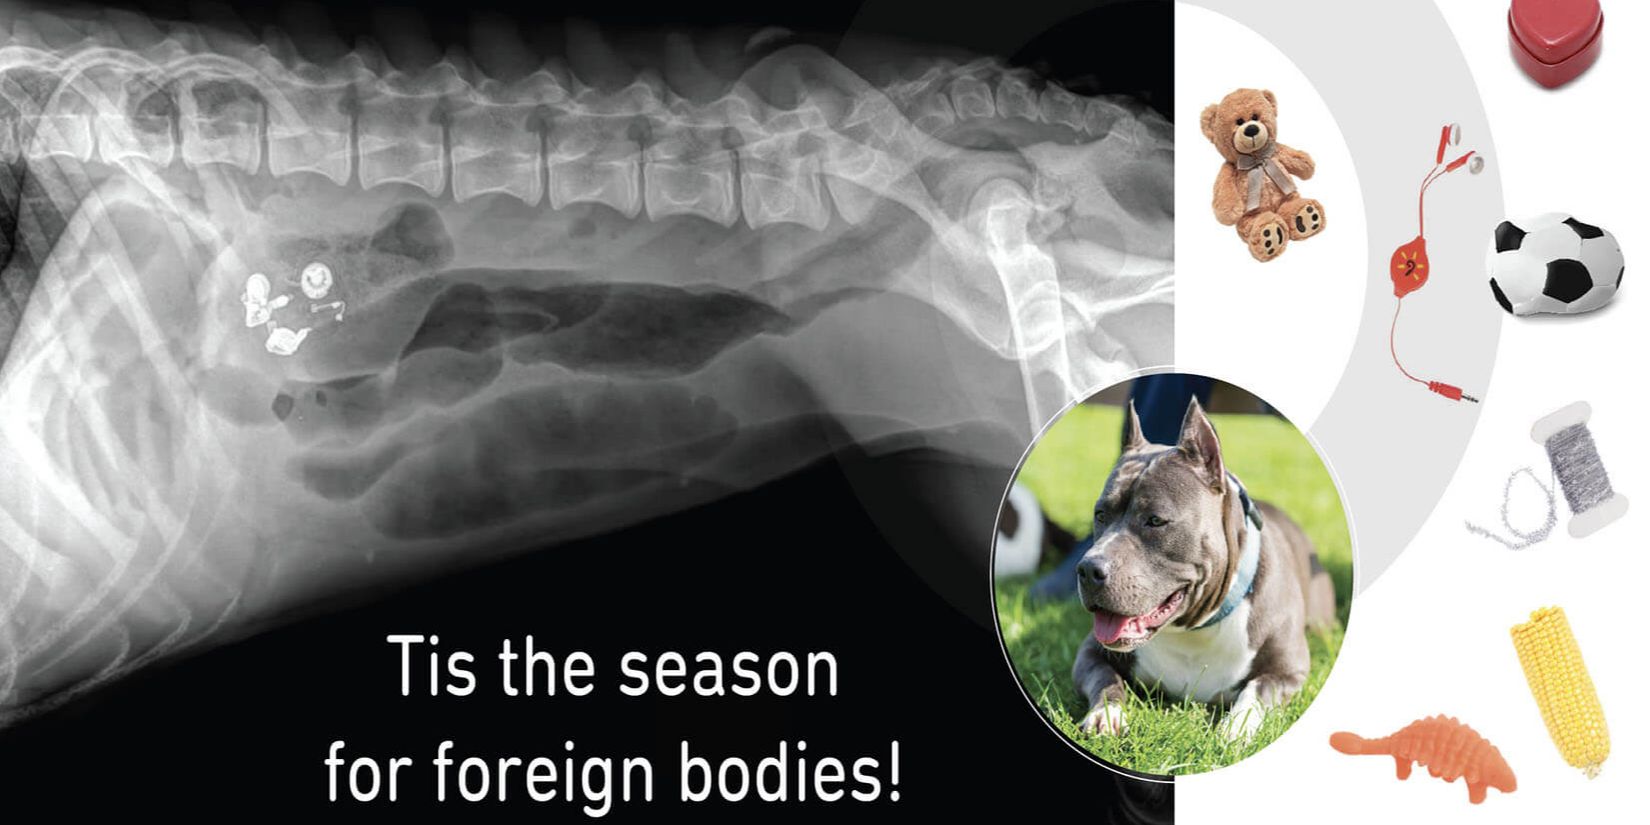 Festive Follies - Tis the season for esophageal foreign bodies!